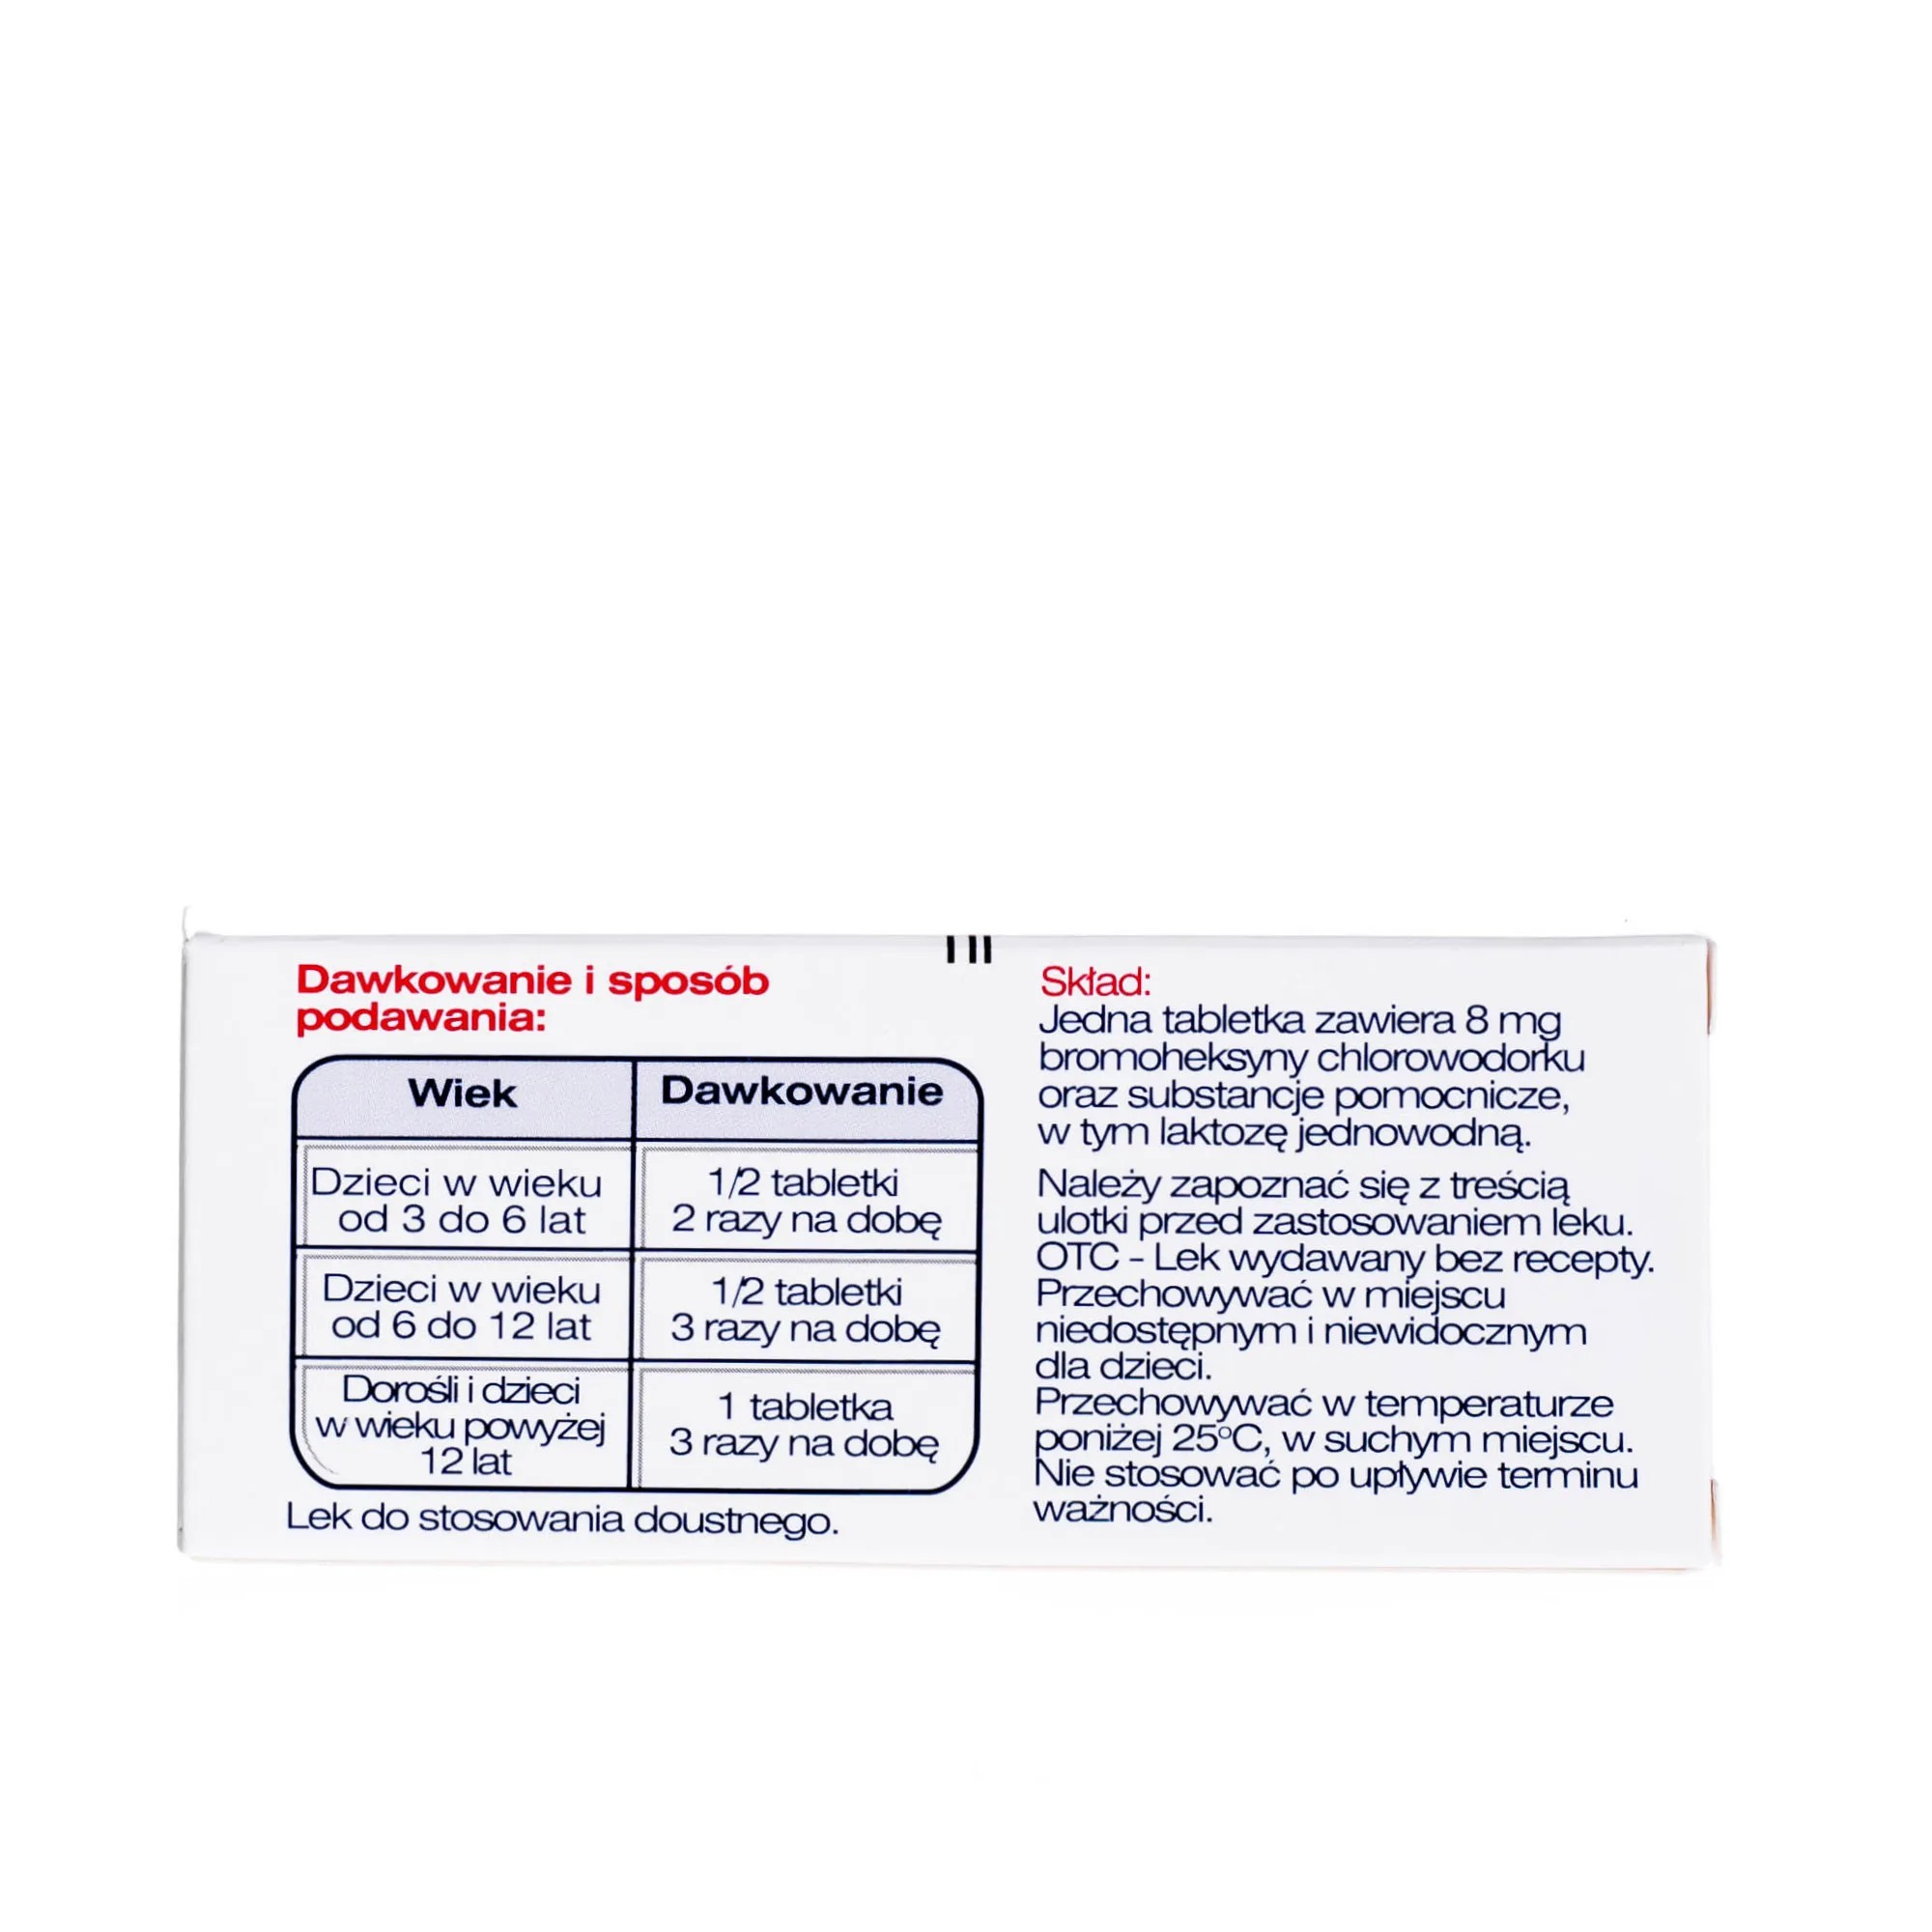 Flegamina , bromhexini hydrochloridum, 8 mg, tabletki, 20 tabletek 